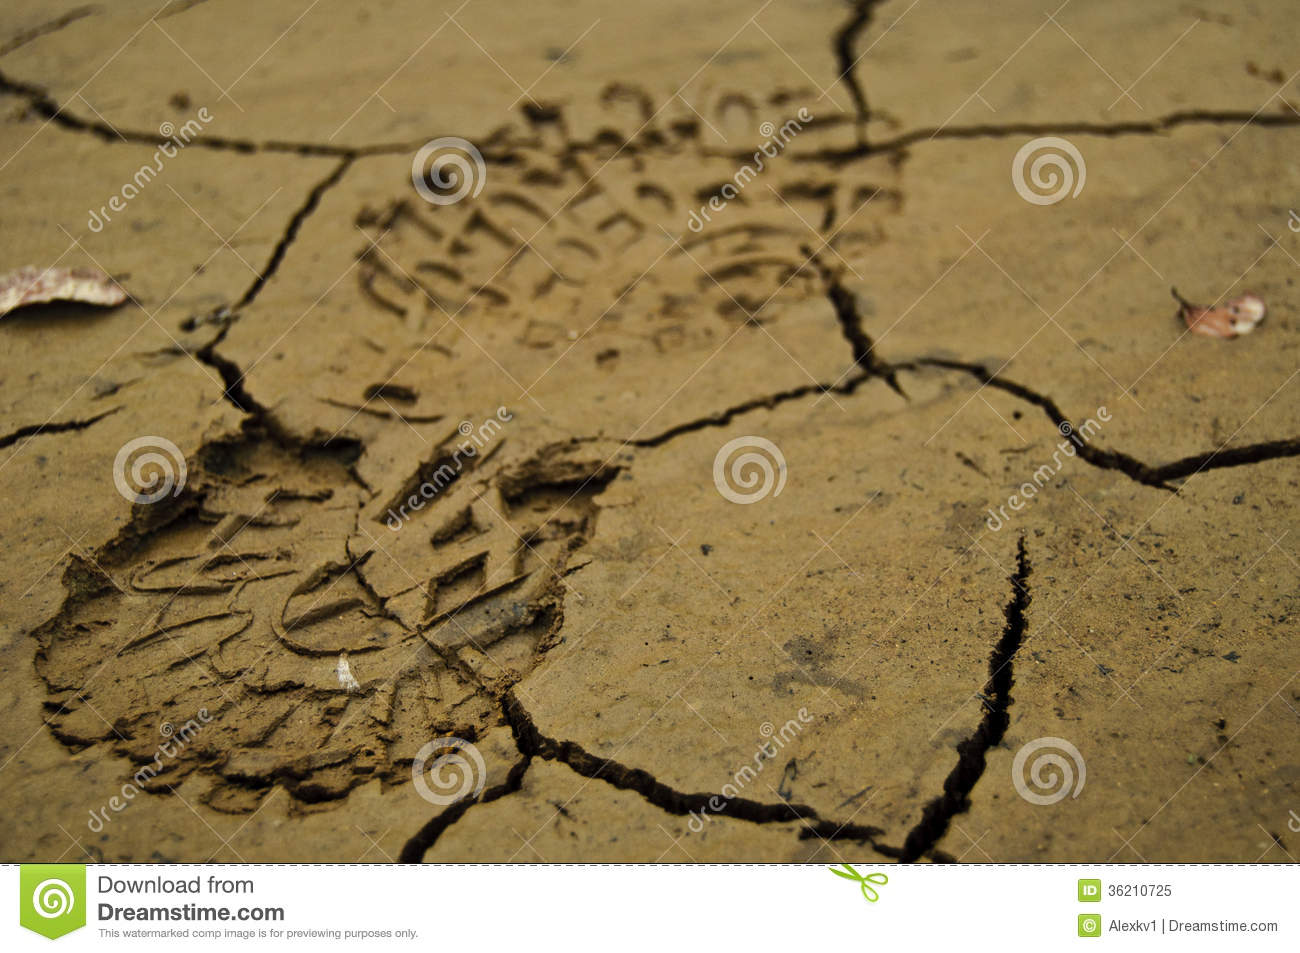 Shoe Footprint In Mud Royalty Free Stock Photo   Image  36210725